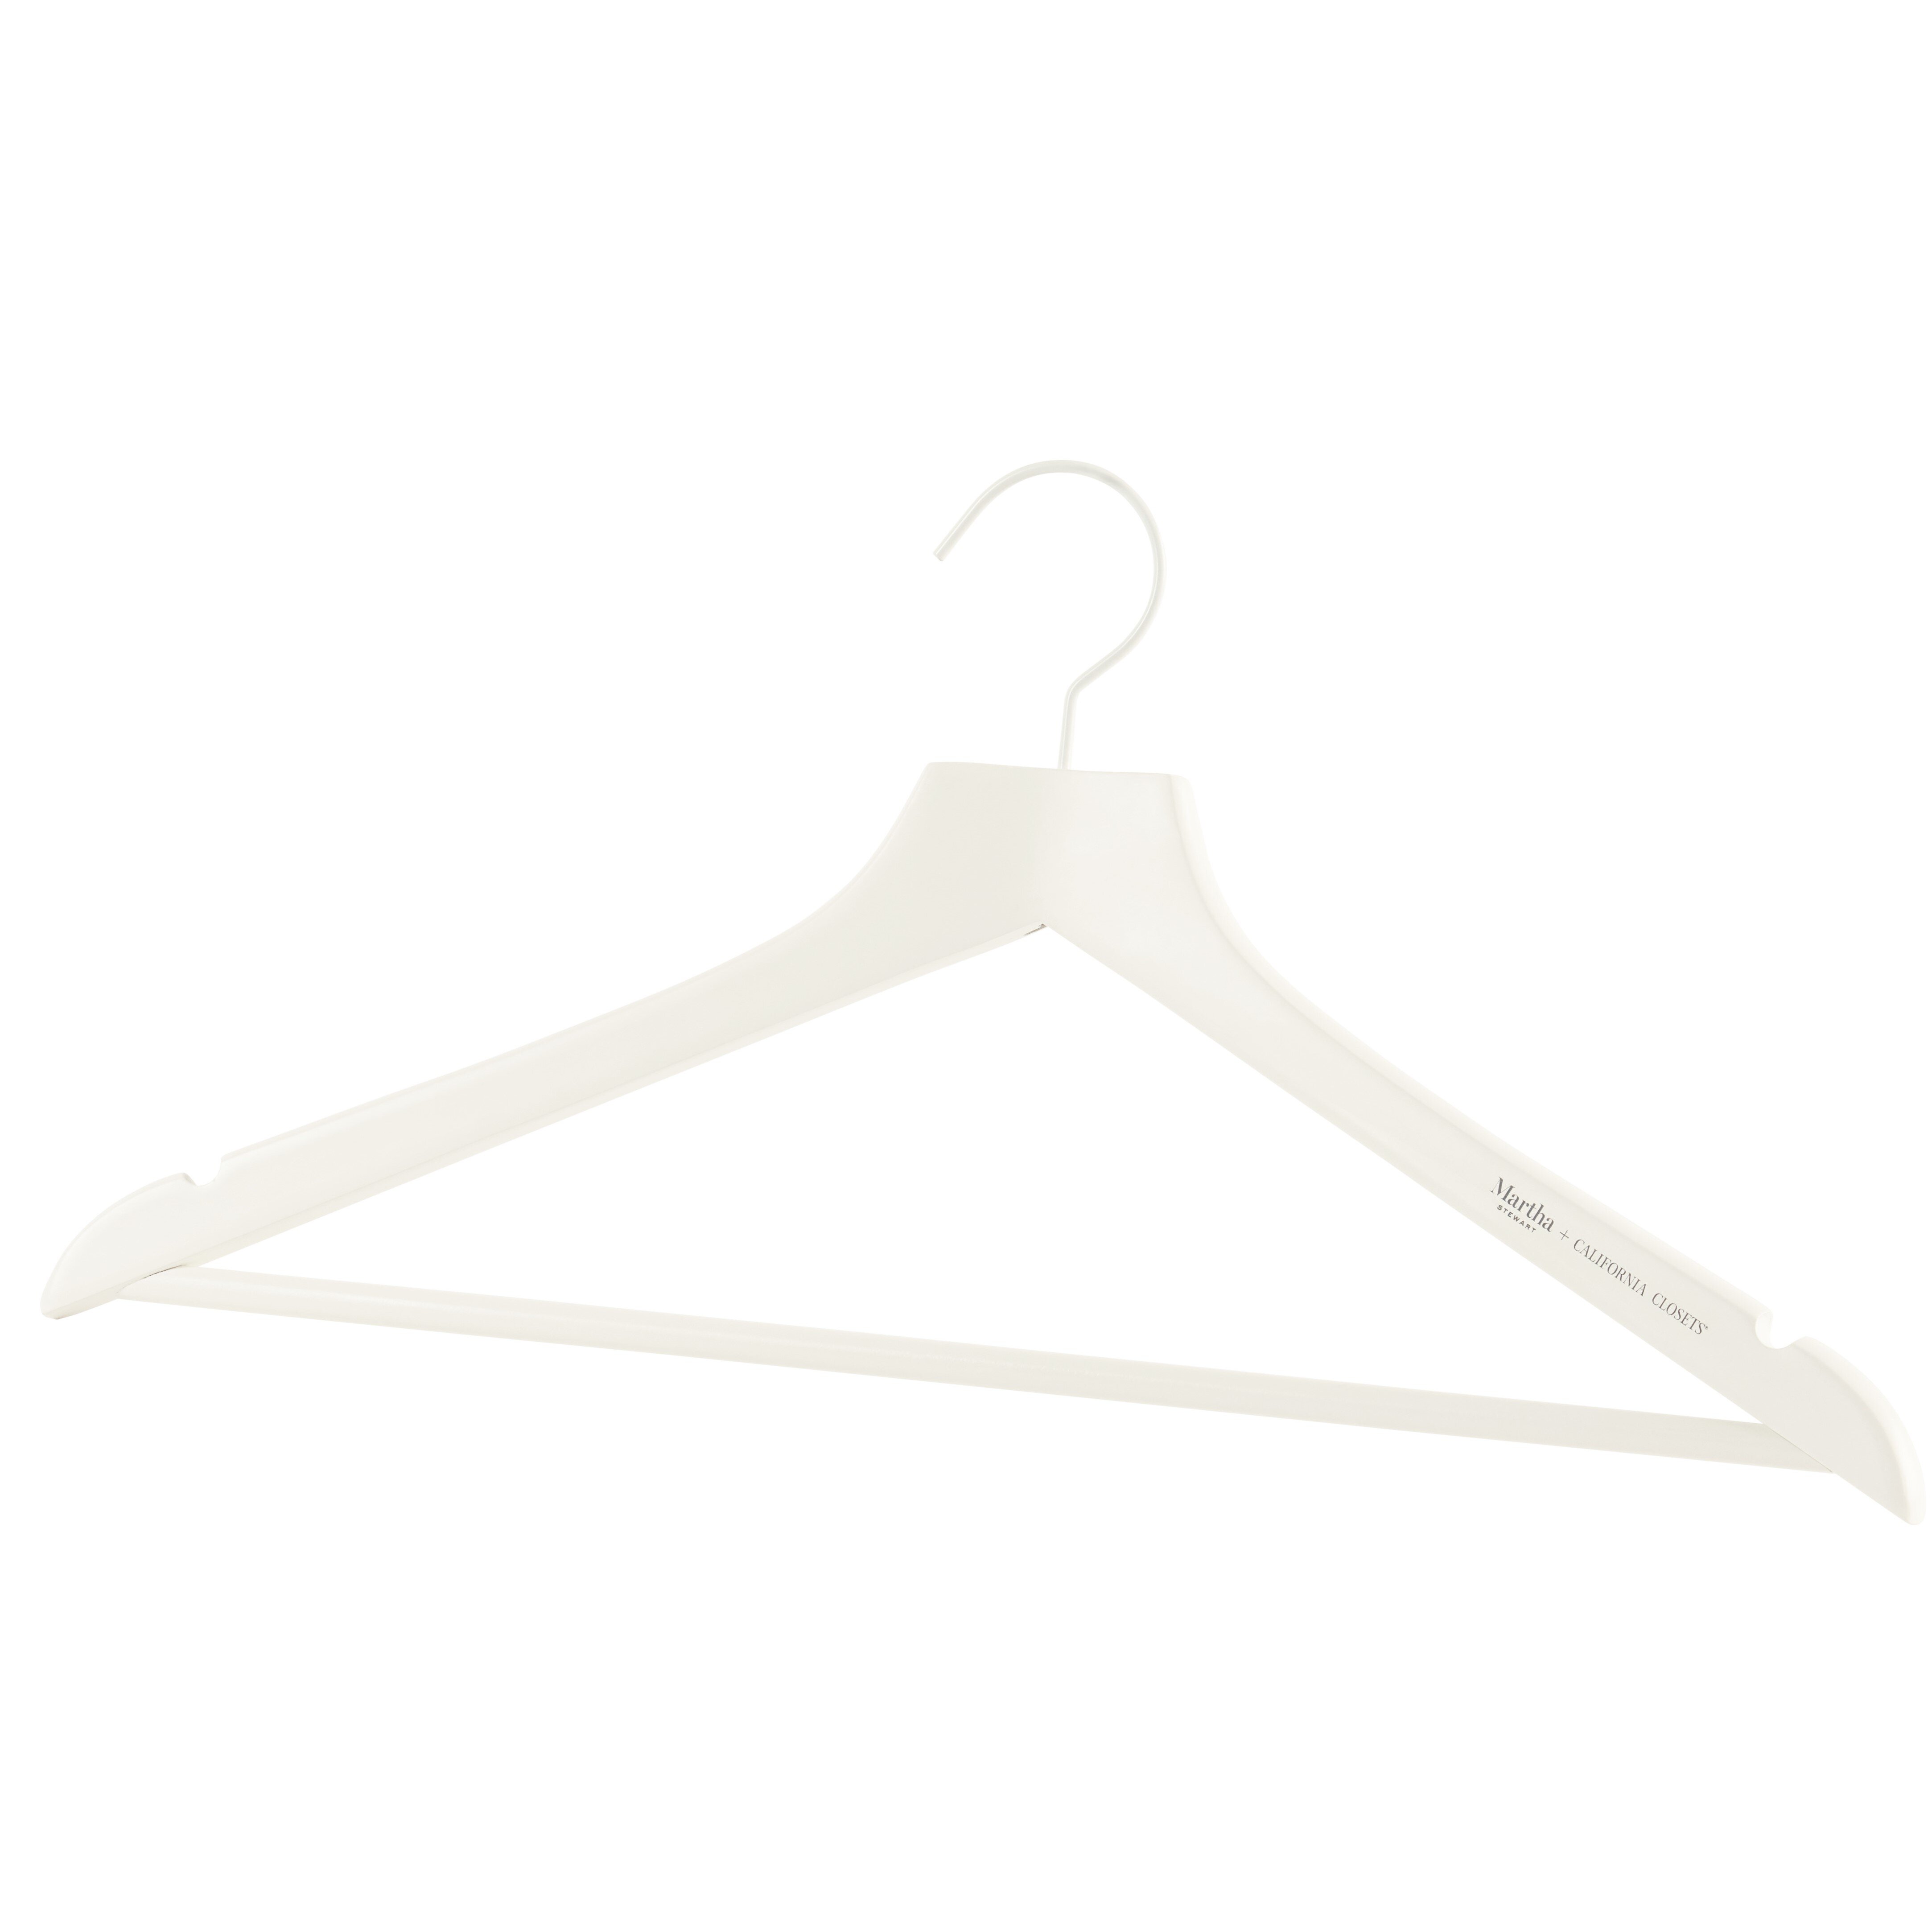 White Cloth On Hangers In White Wardrobe by Stocksy Contributor Martí  Sans - Stocksy